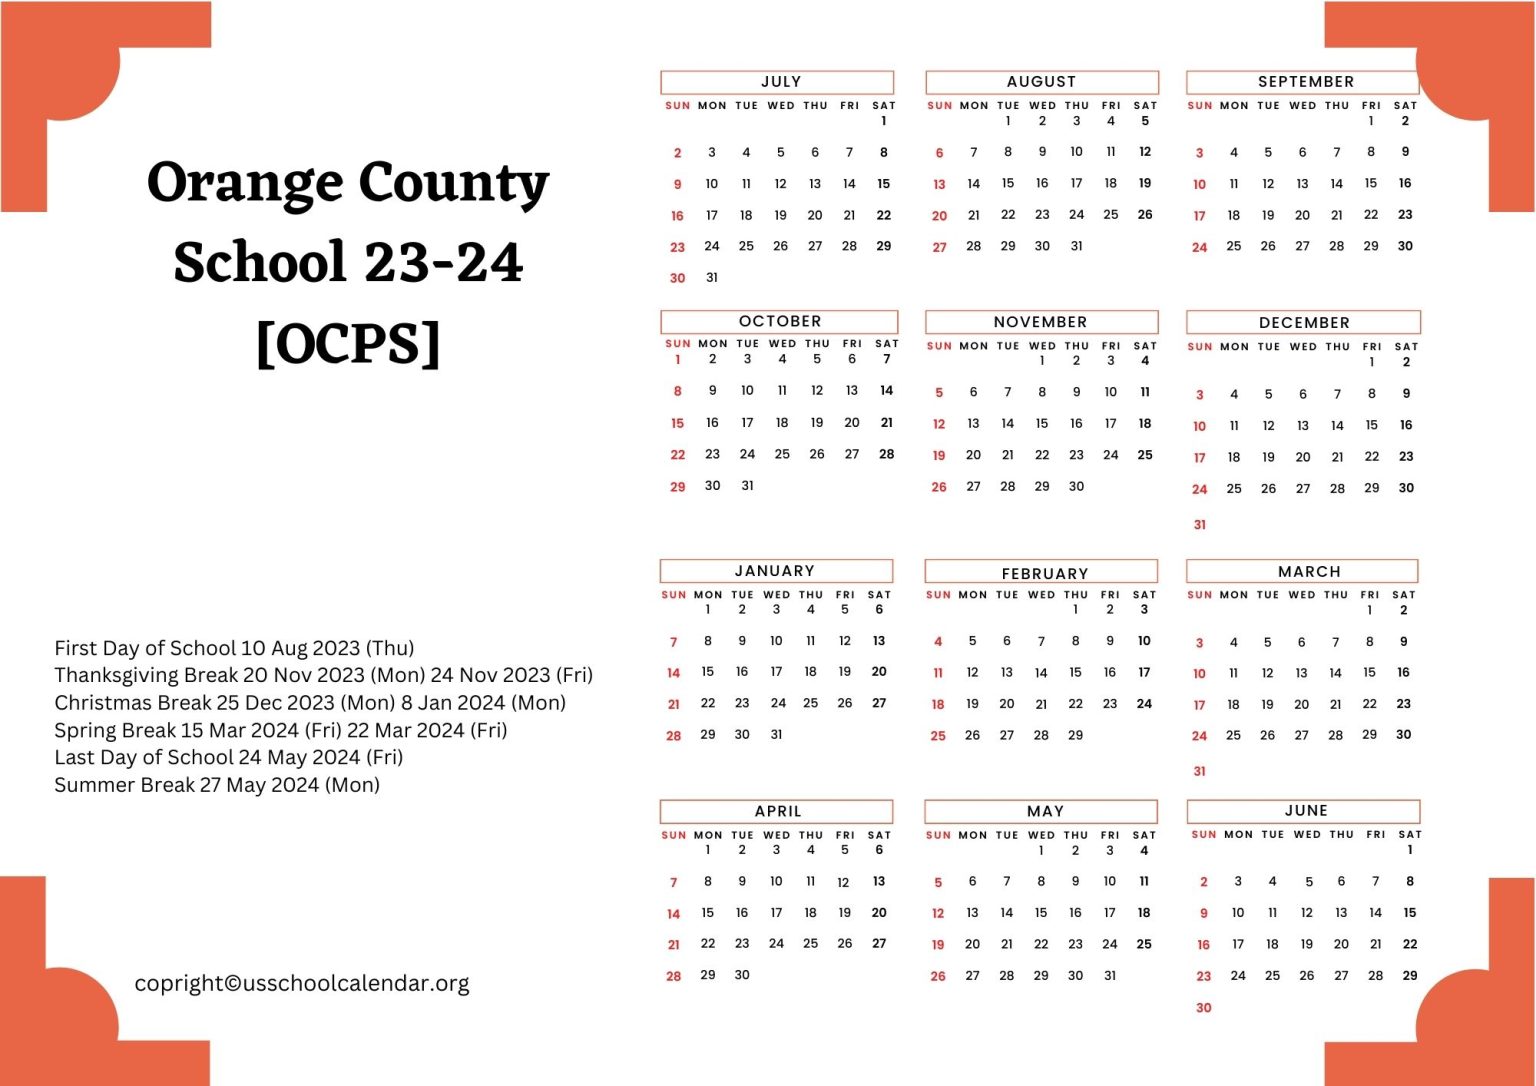 orange-county-school-calendar-holidays-2023-2024-ocps